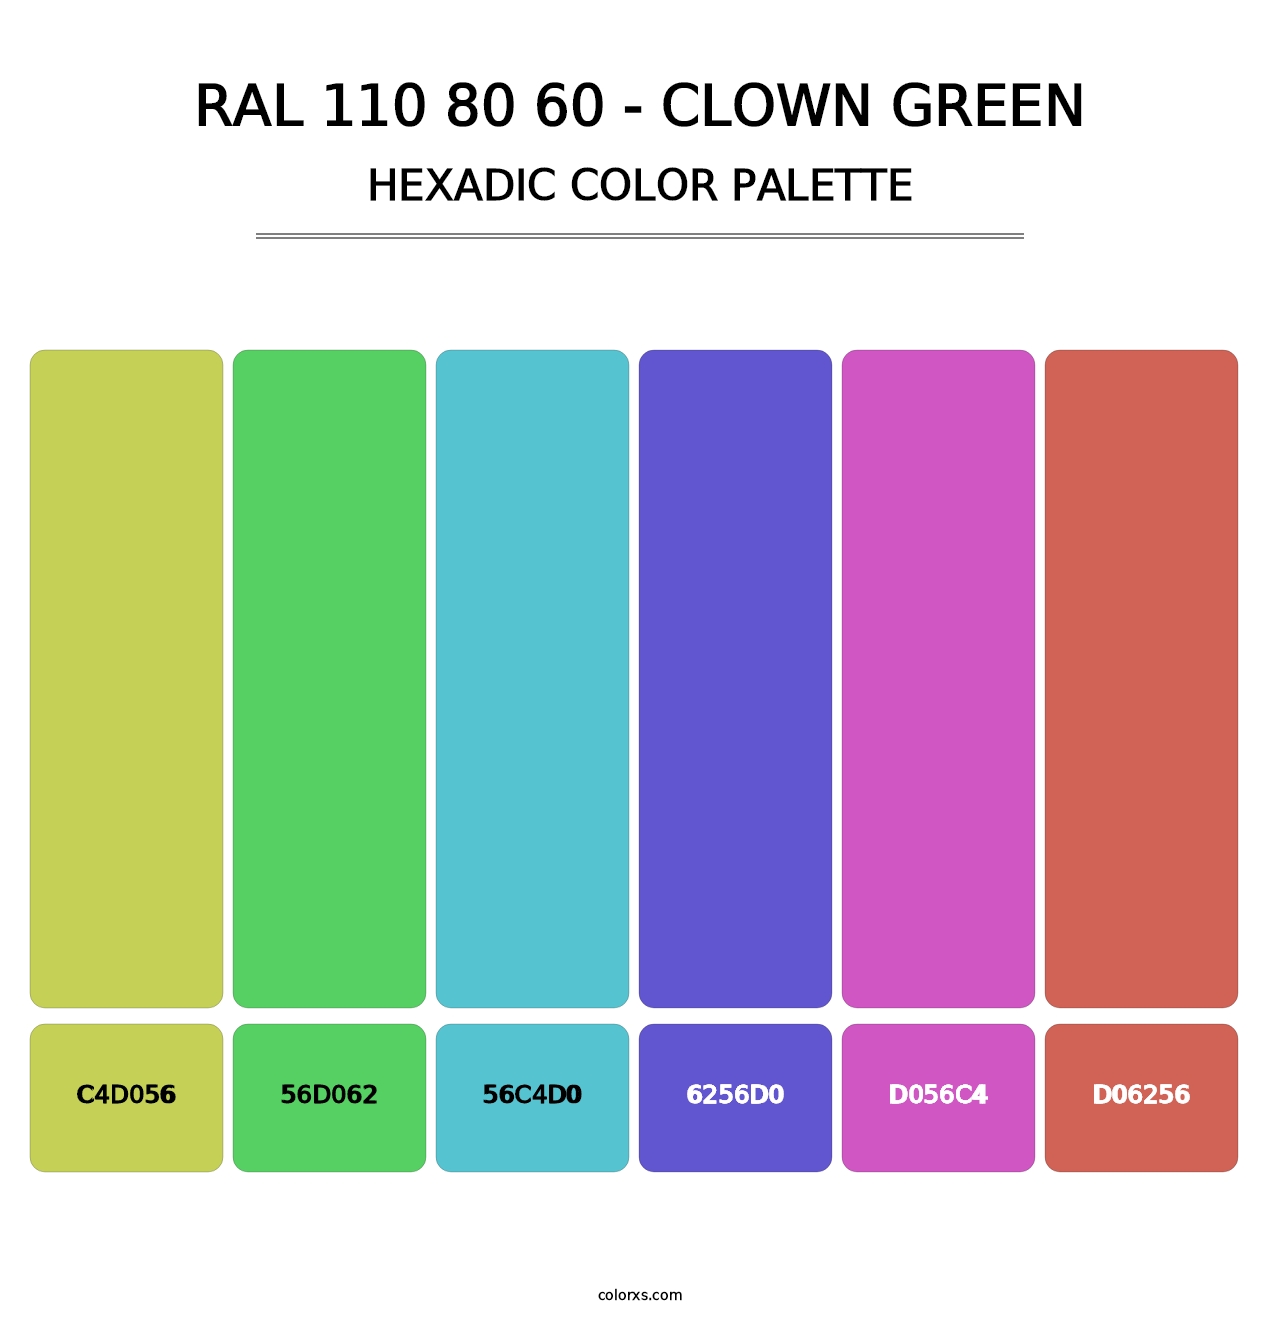 RAL 110 80 60 - Clown Green - Hexadic Color Palette